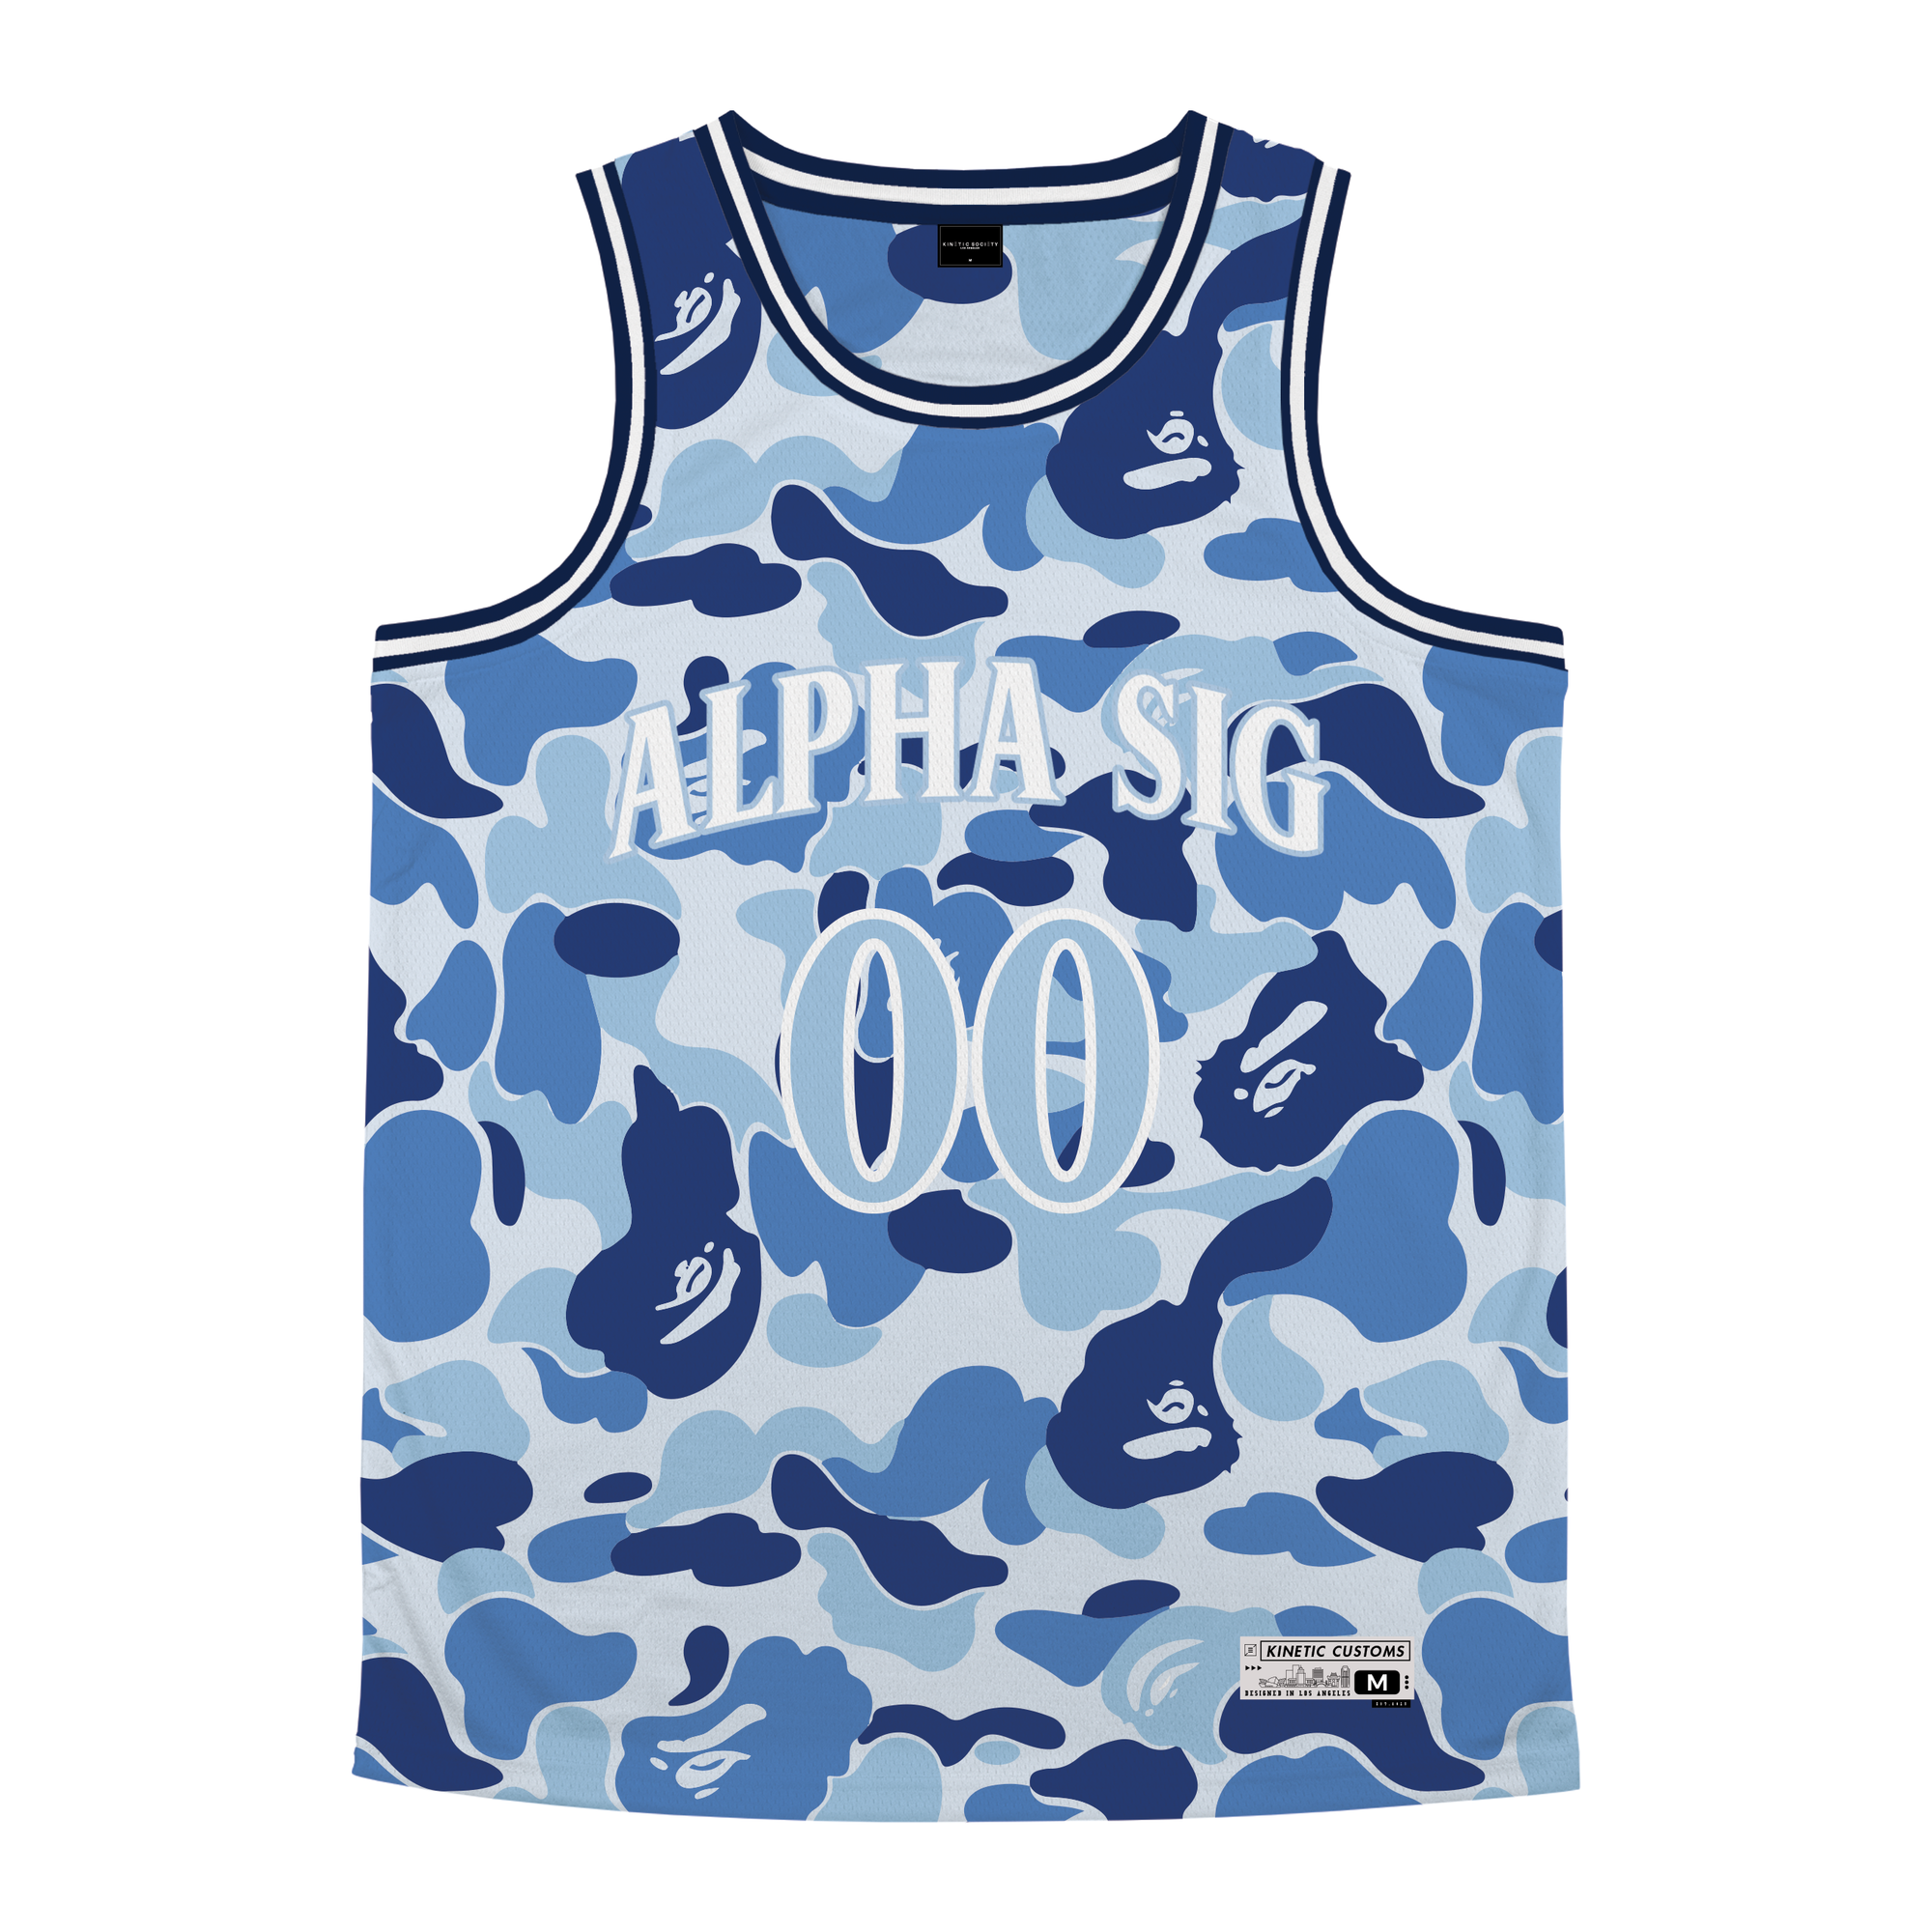 Alpha Sigma Phi - Blue Camo Basketball Jersey